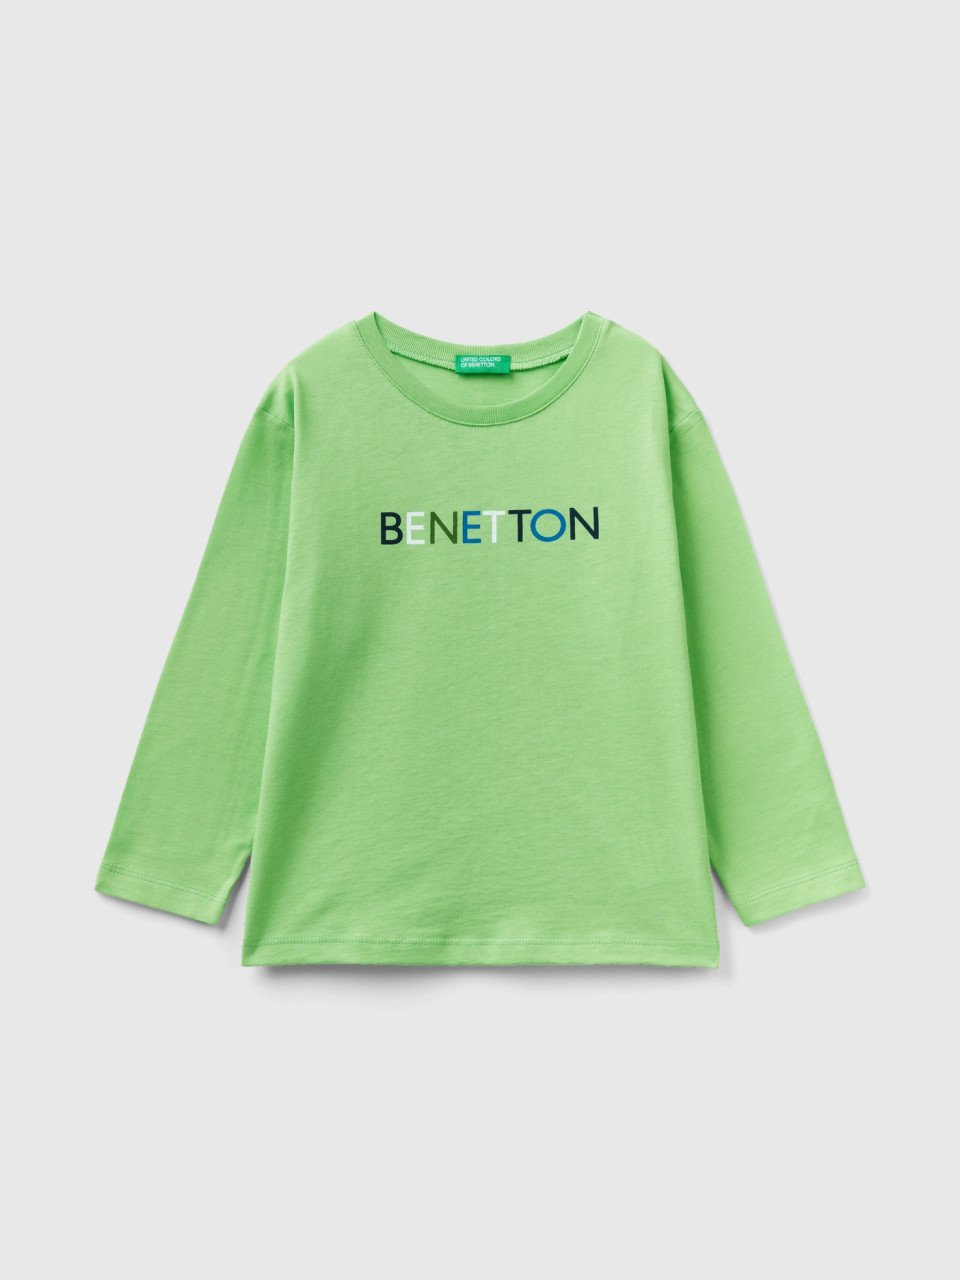 Benetton, Camiseta De Manga Larga De Algodón Orgánico, Verde Claro, Niños